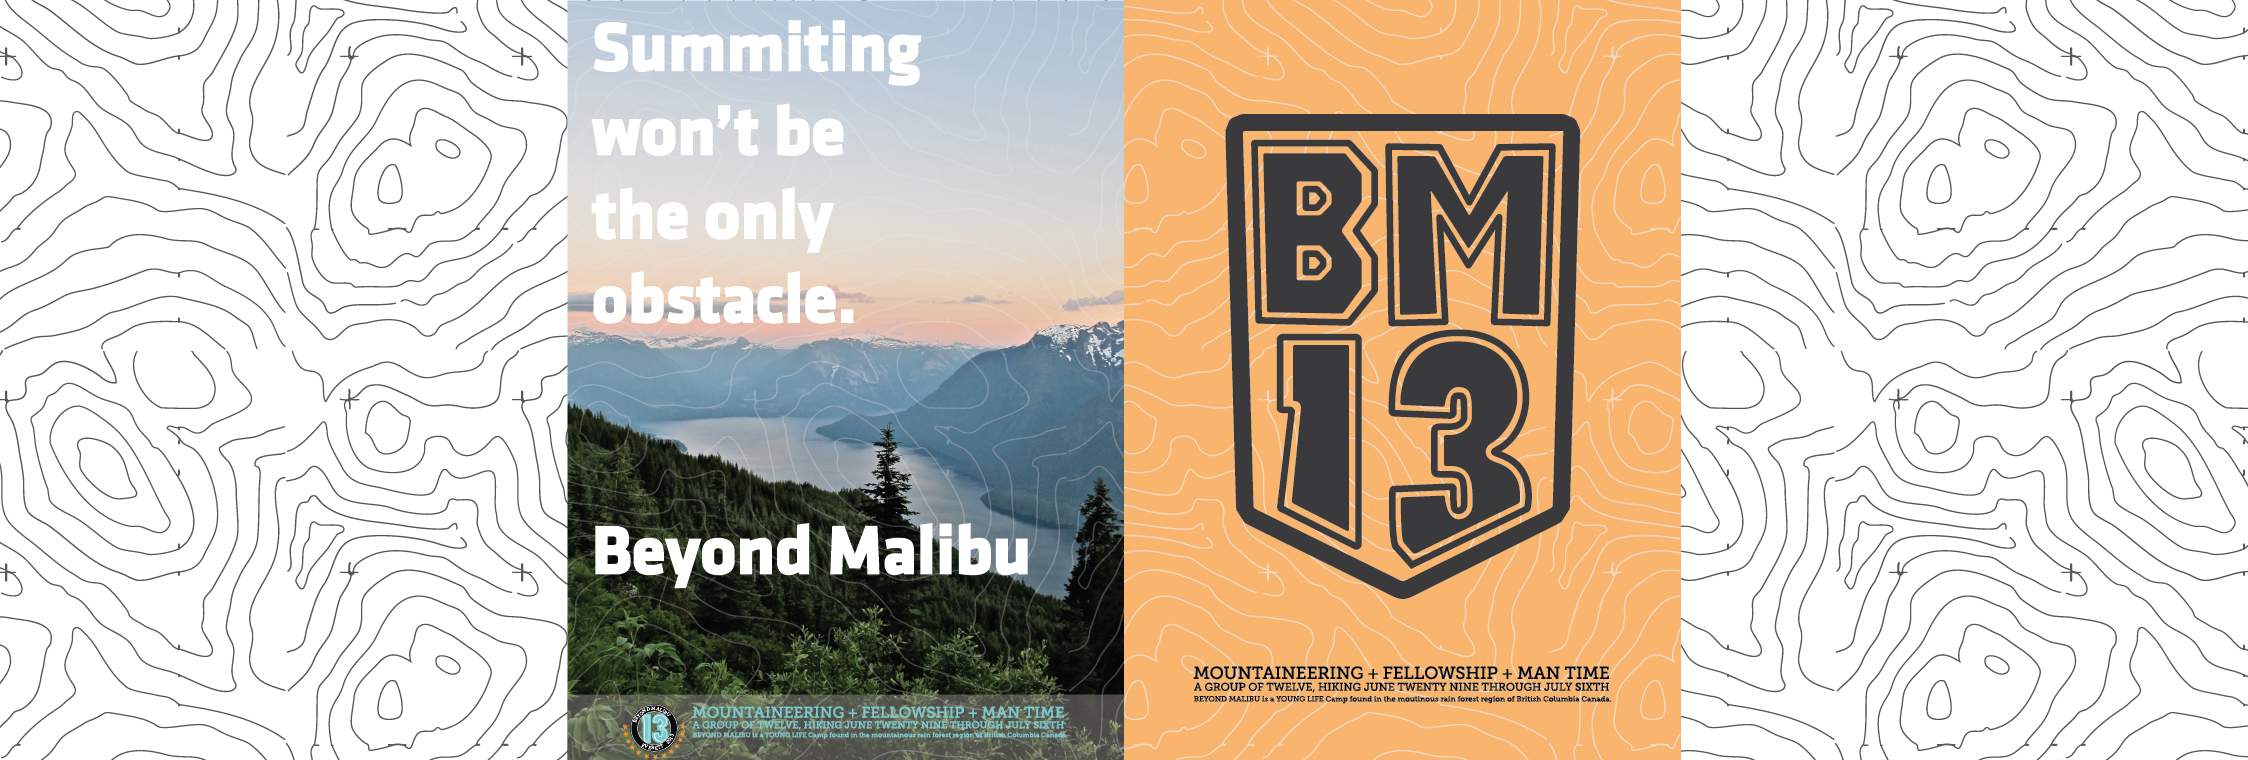 Beyond Malibu Young Life Design Adventure event branding